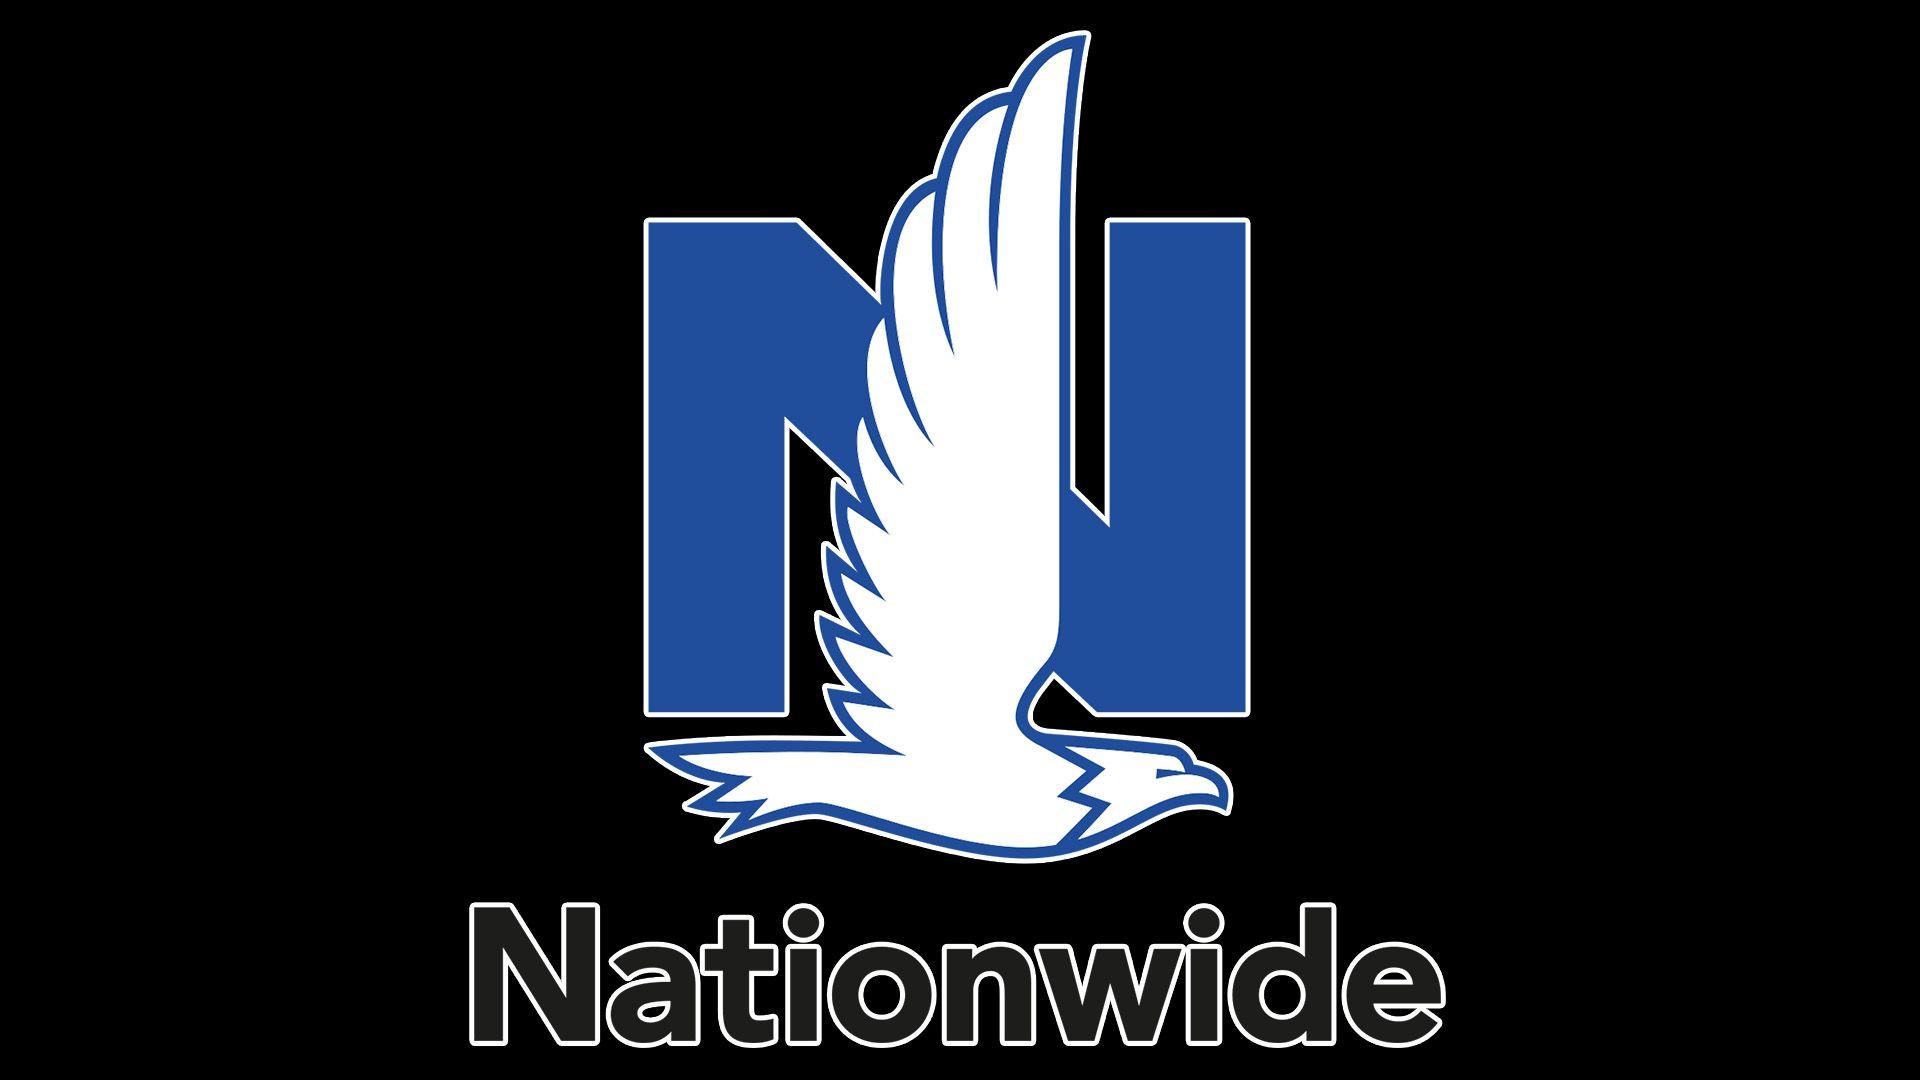 Nationwide Eagle Logo - Nationwide logo, symbol, meaning, History and Evolution